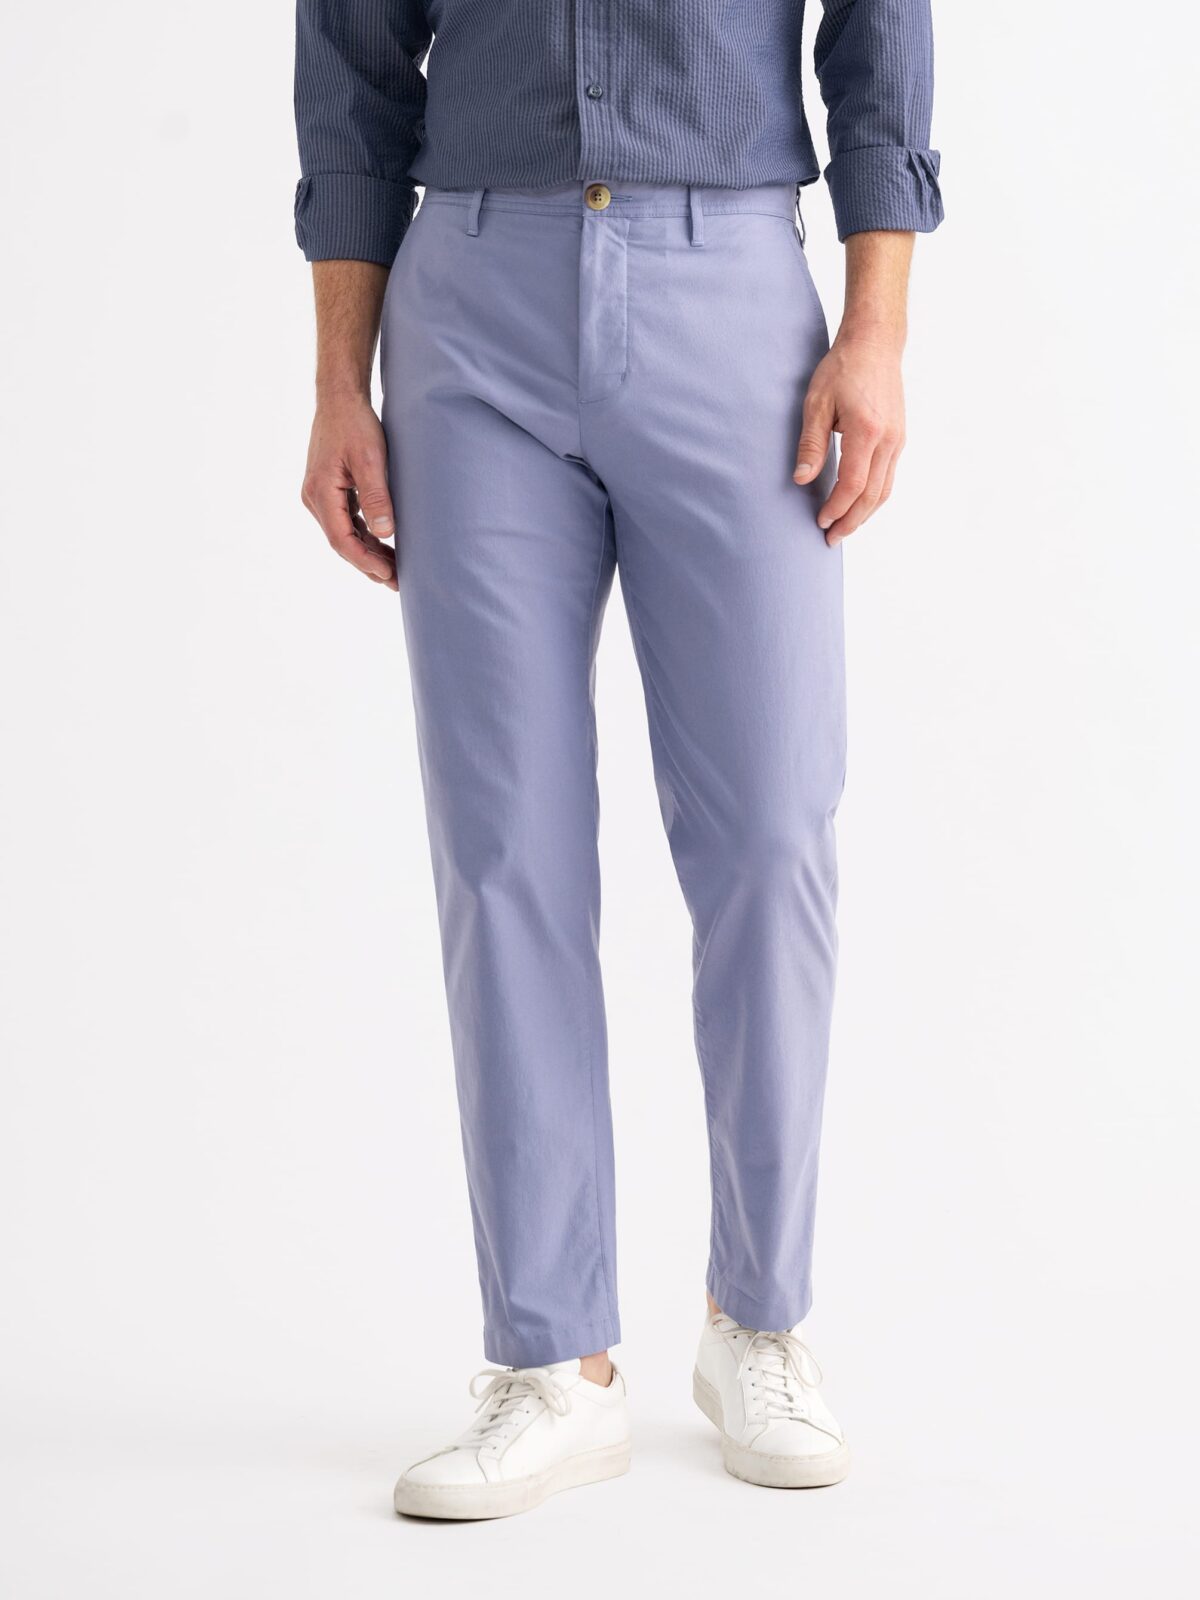 GANT Light Blue Cotton Linen Blend Chino Pants Trousers EU 48 50 52 54 56  UK/US | eBay